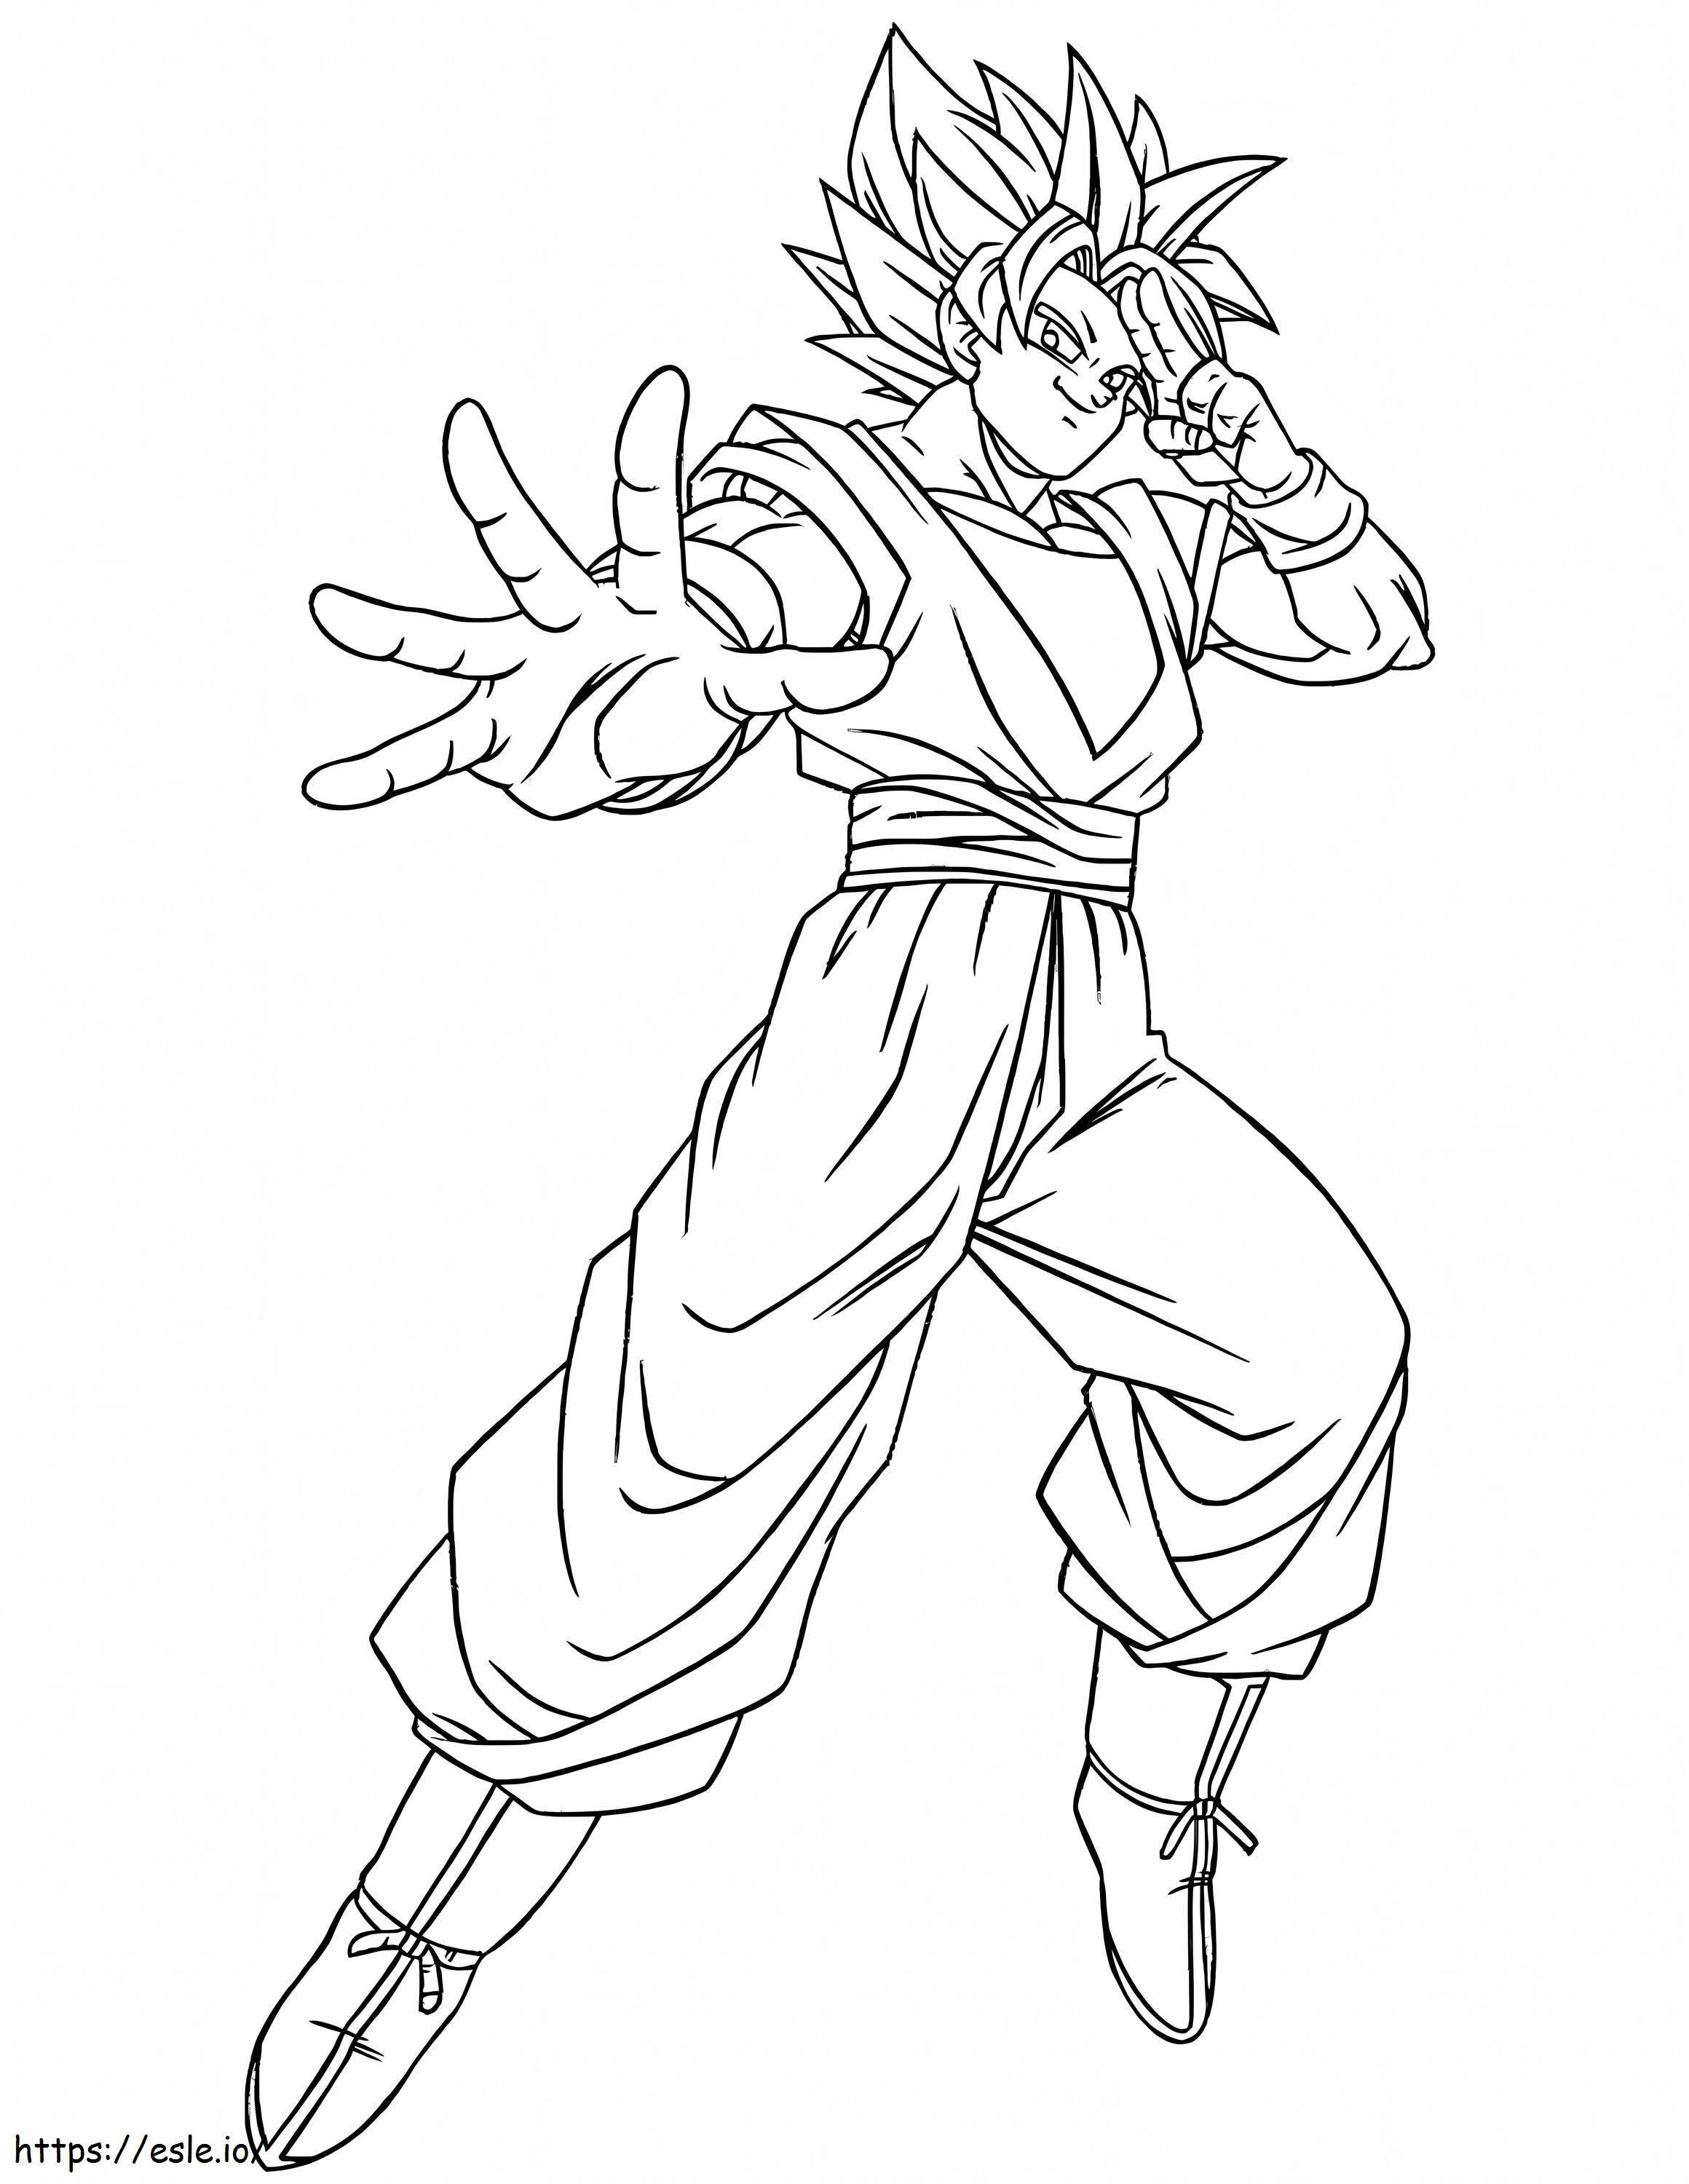 Smiling Goku Ssj2 coloring page